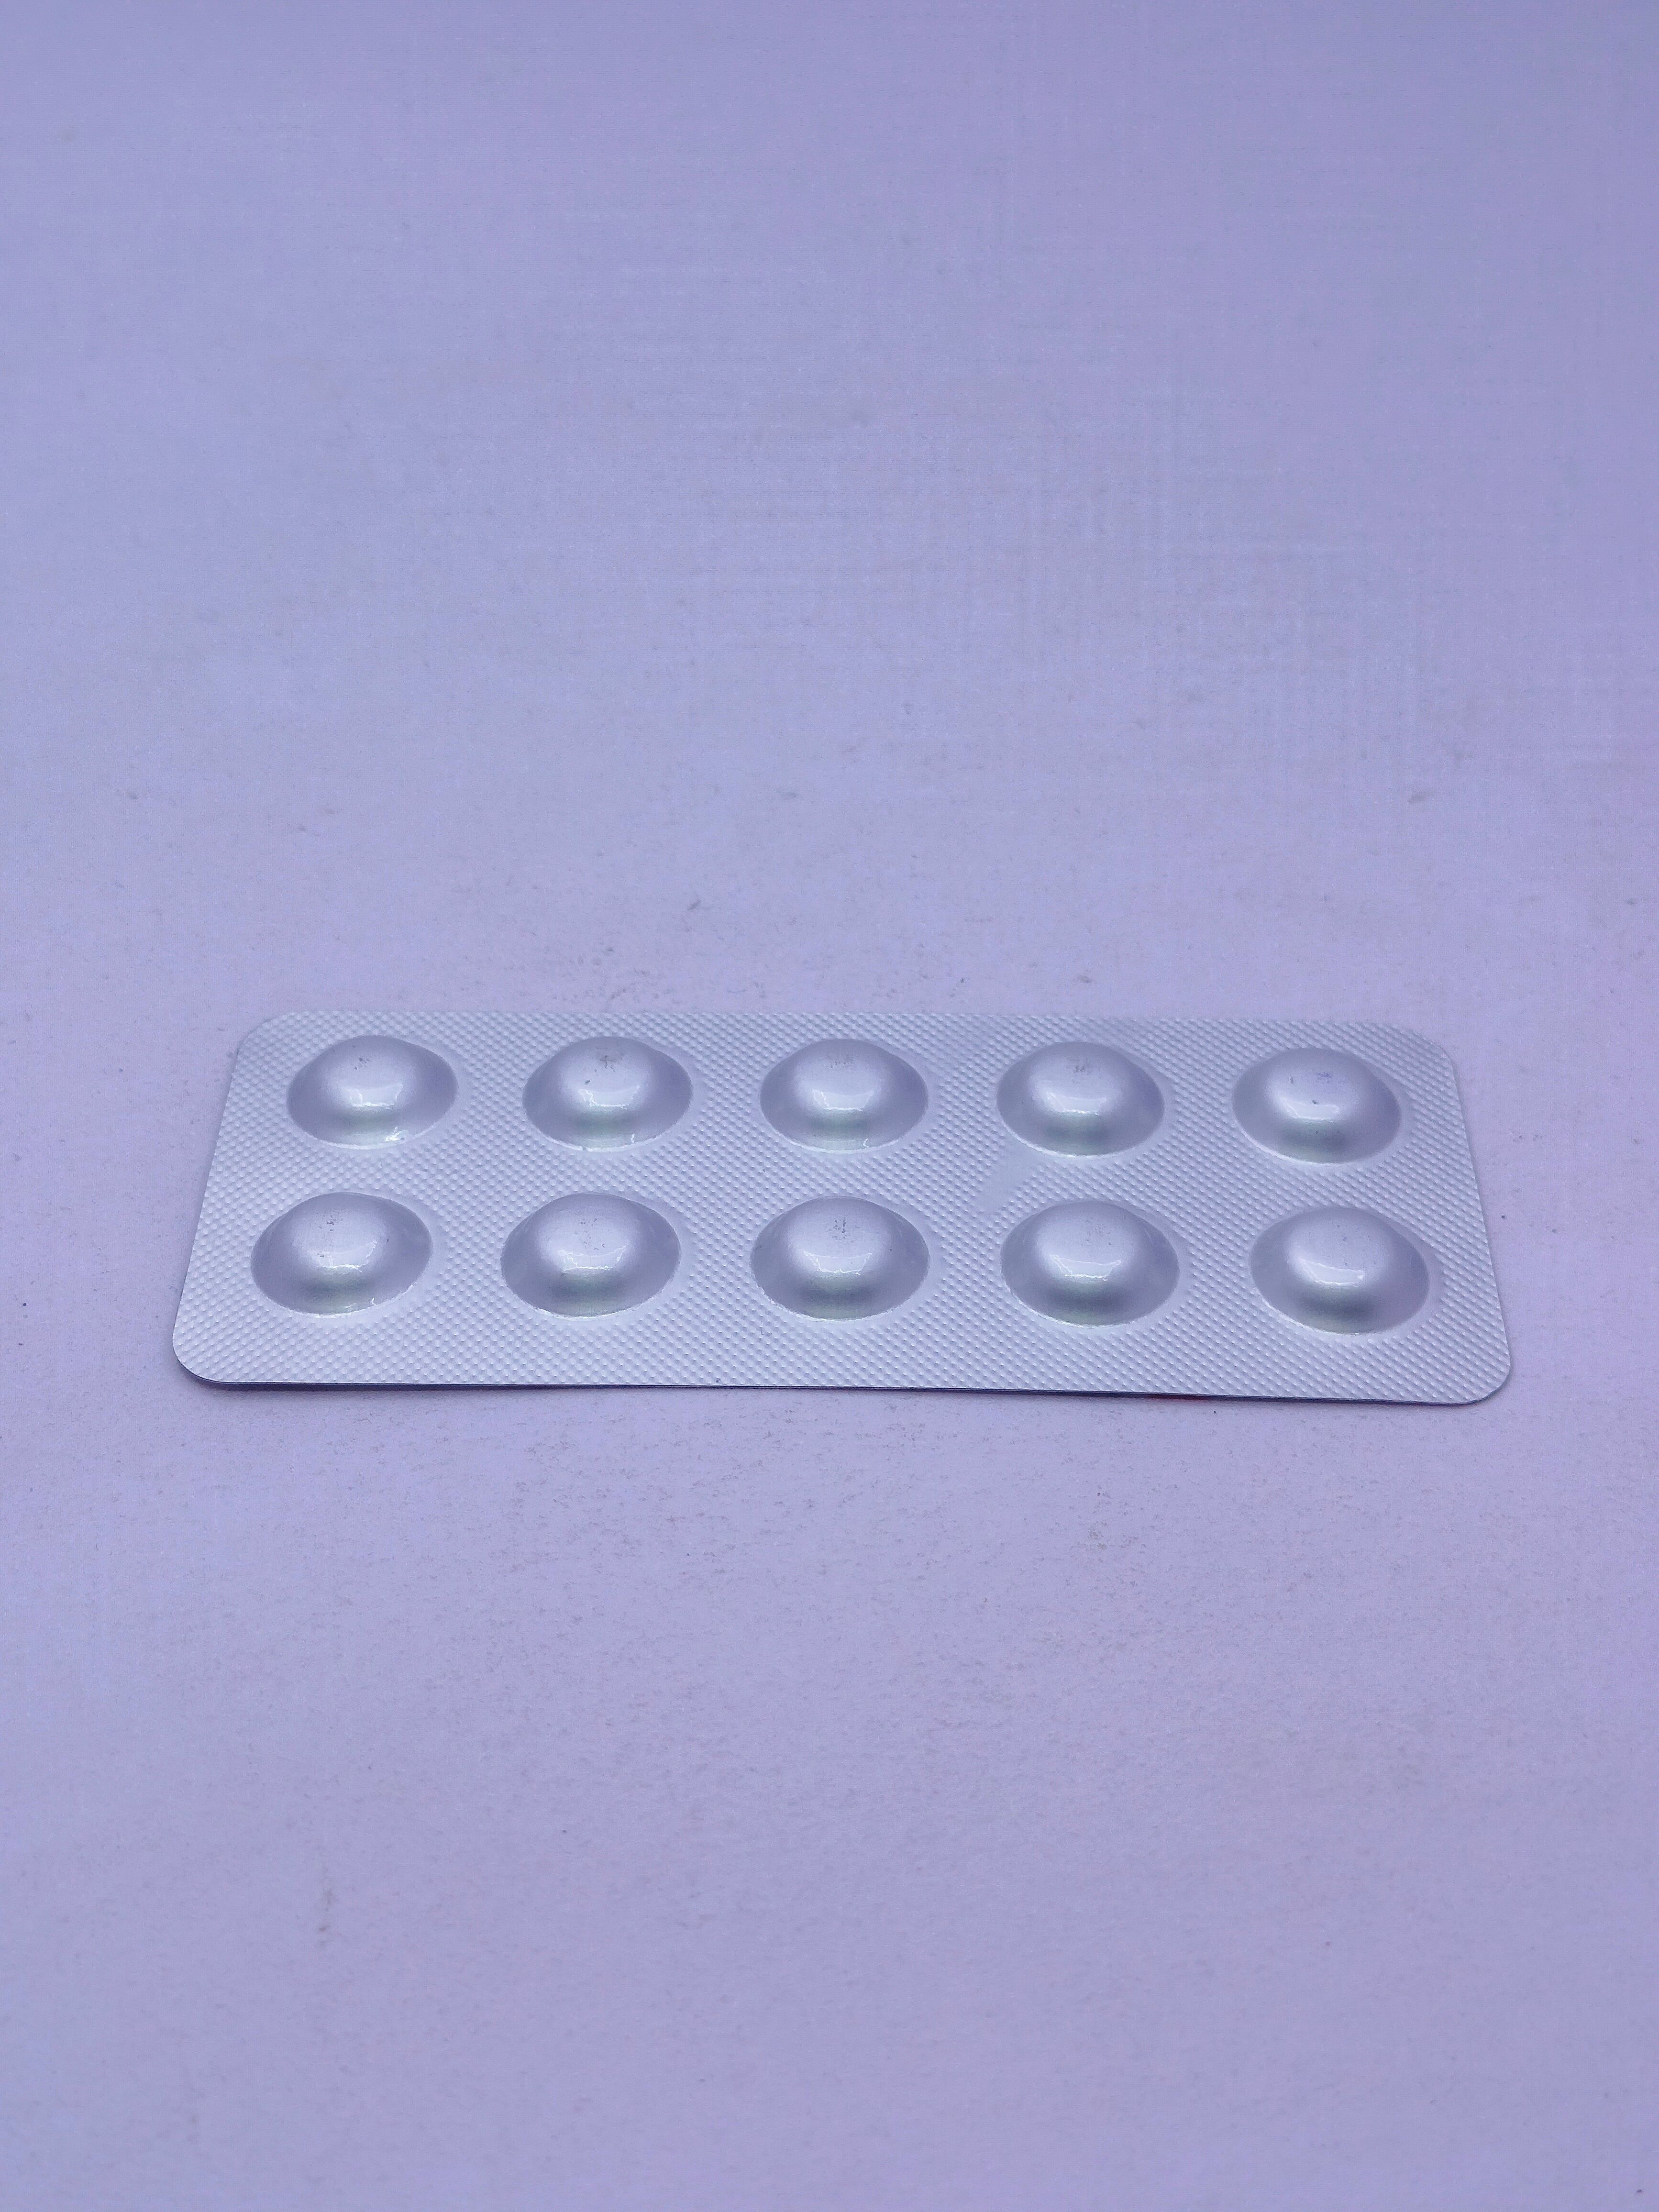 Telmisartan and Cilnidepine Tablets